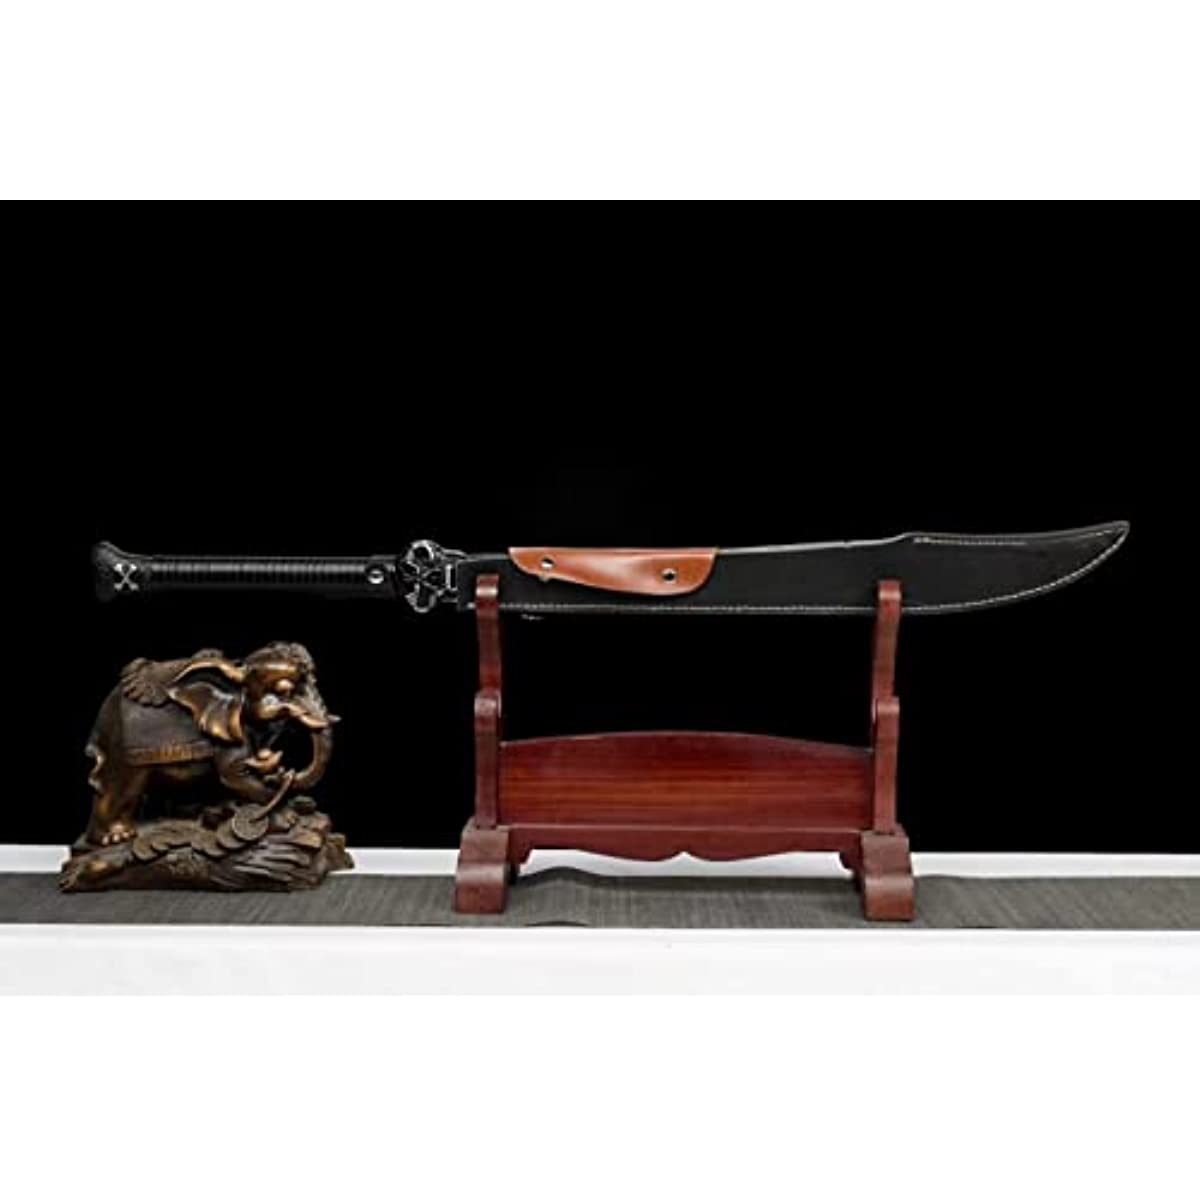 LOONGSWORD,chinese sword,DaDao,Broadsword,High Carbon Steel Blade,PU Scabbard Length 36"